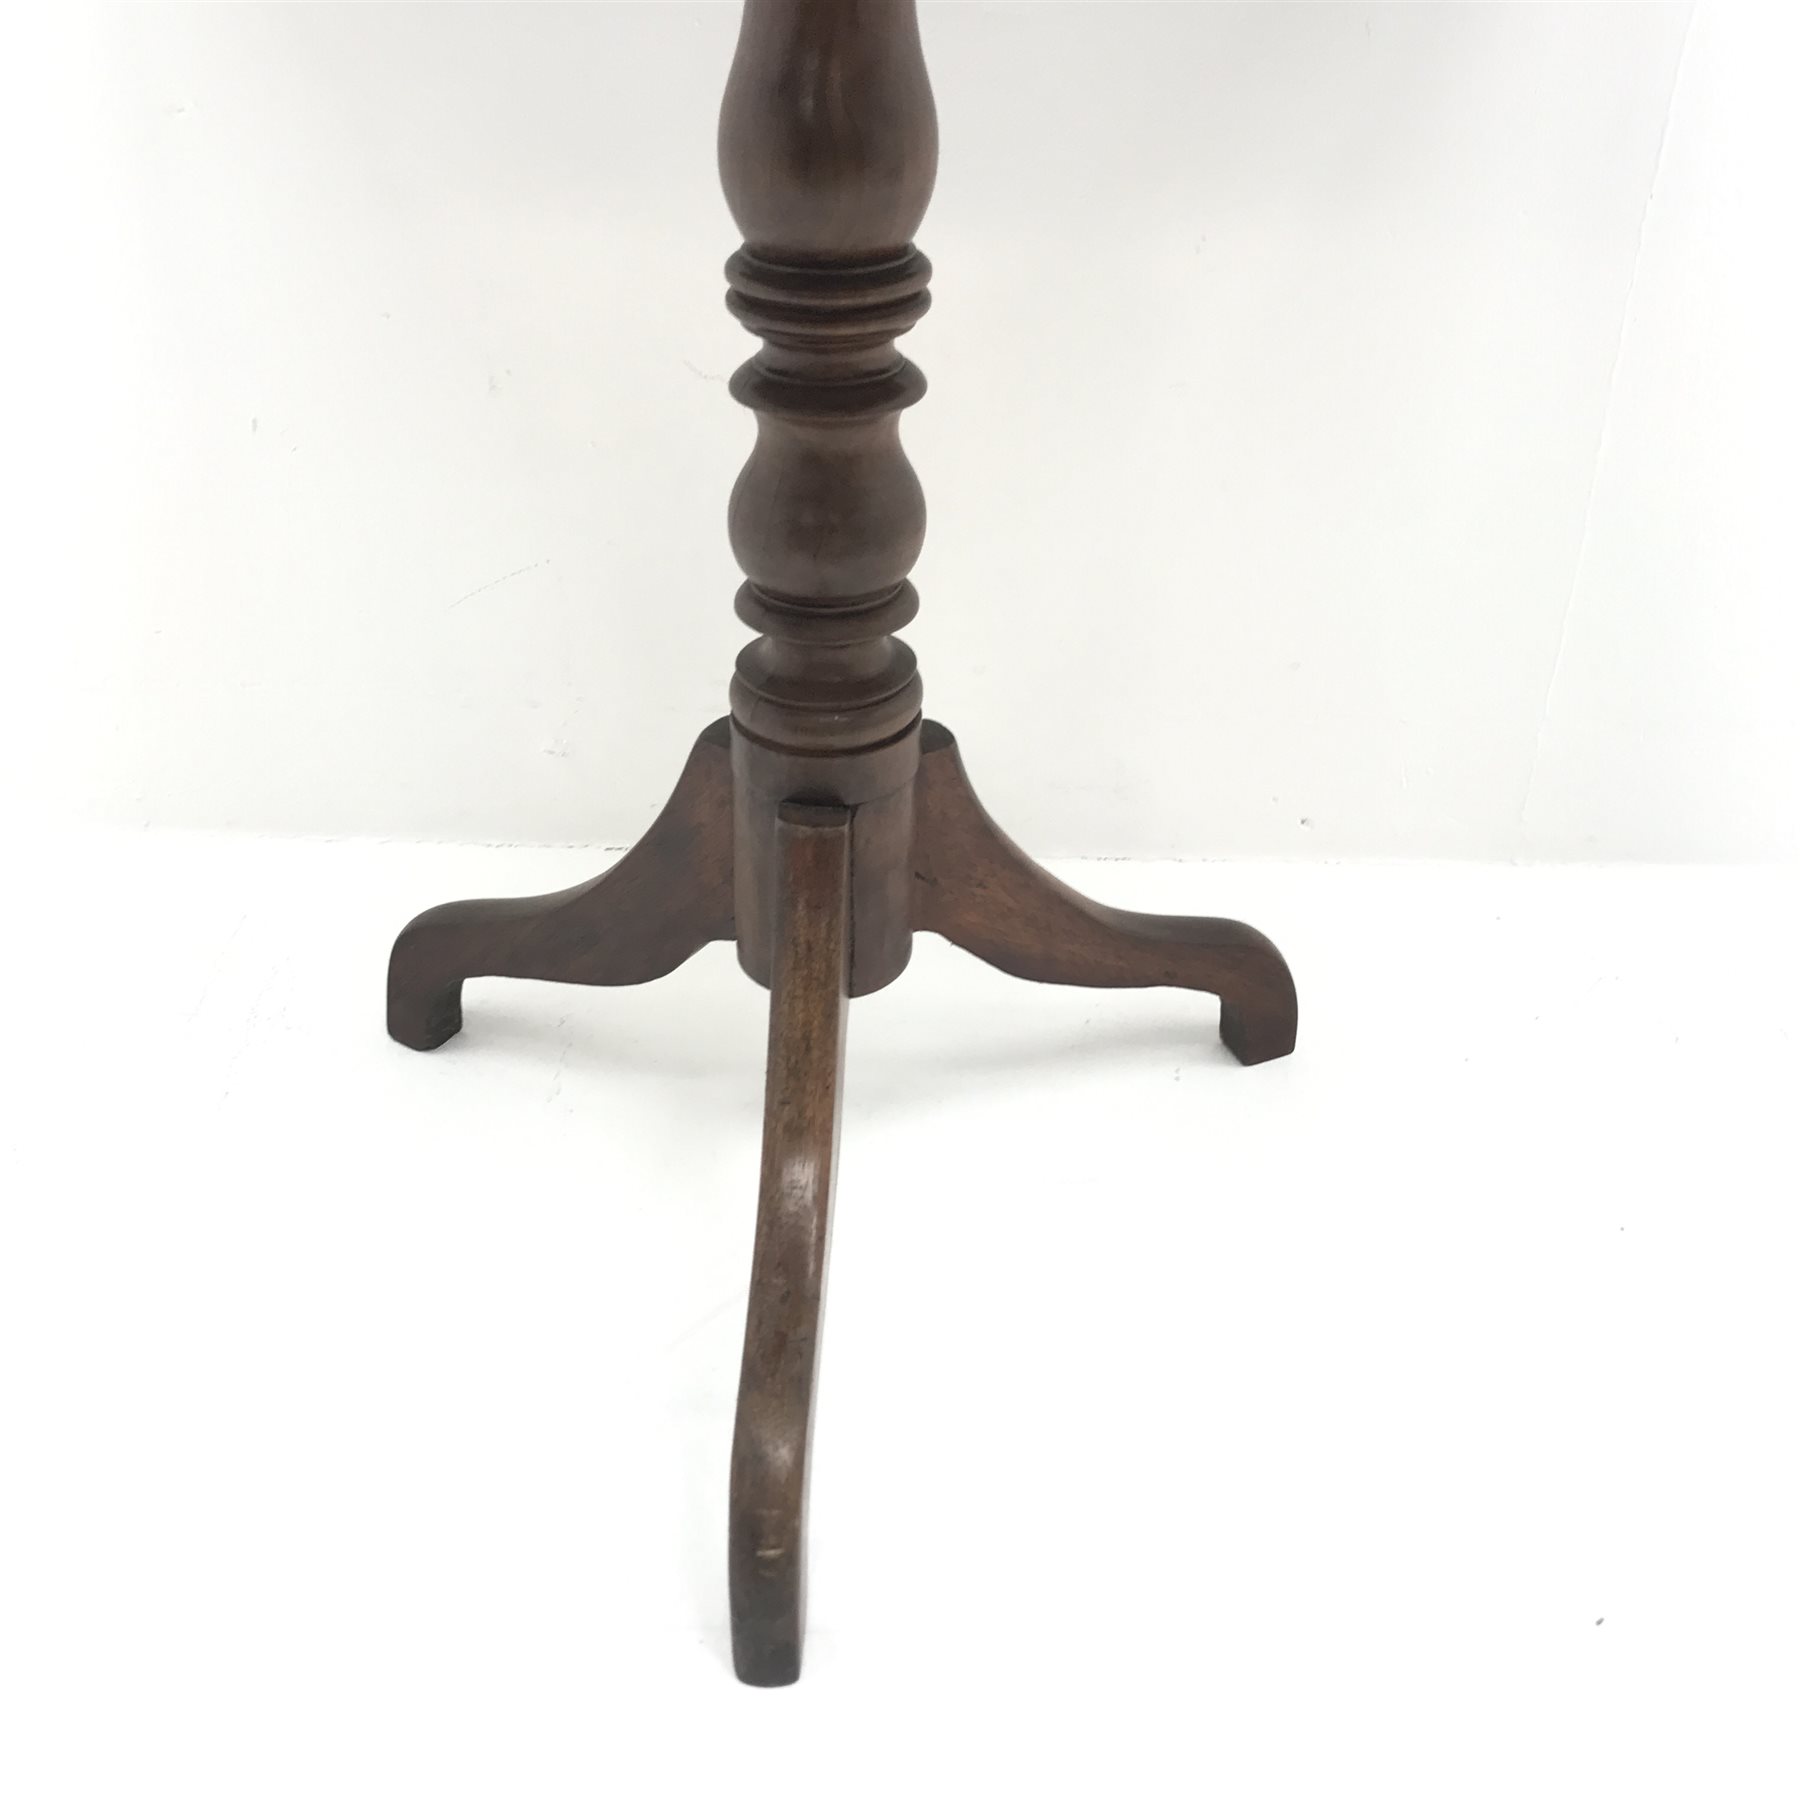 19th century mahogany tilt top table, single turned column on tripod base, W75cm, H71cm, D85cm - Image 4 of 6